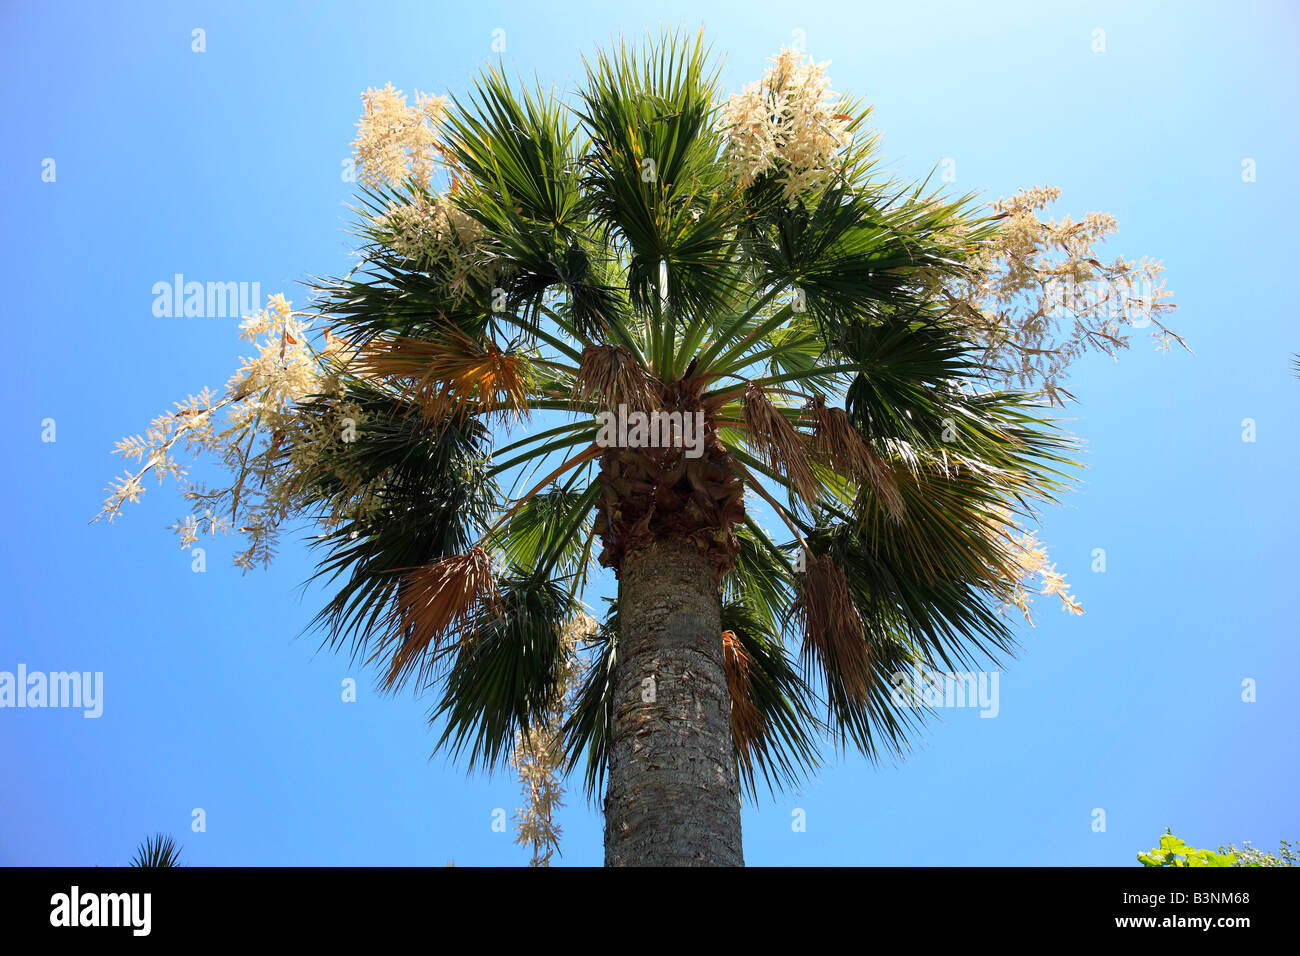 Natur, Pflanzen, palme, Hanfpalme, trachycarpus, Kalabrien, Italien, Europa Foto Stock